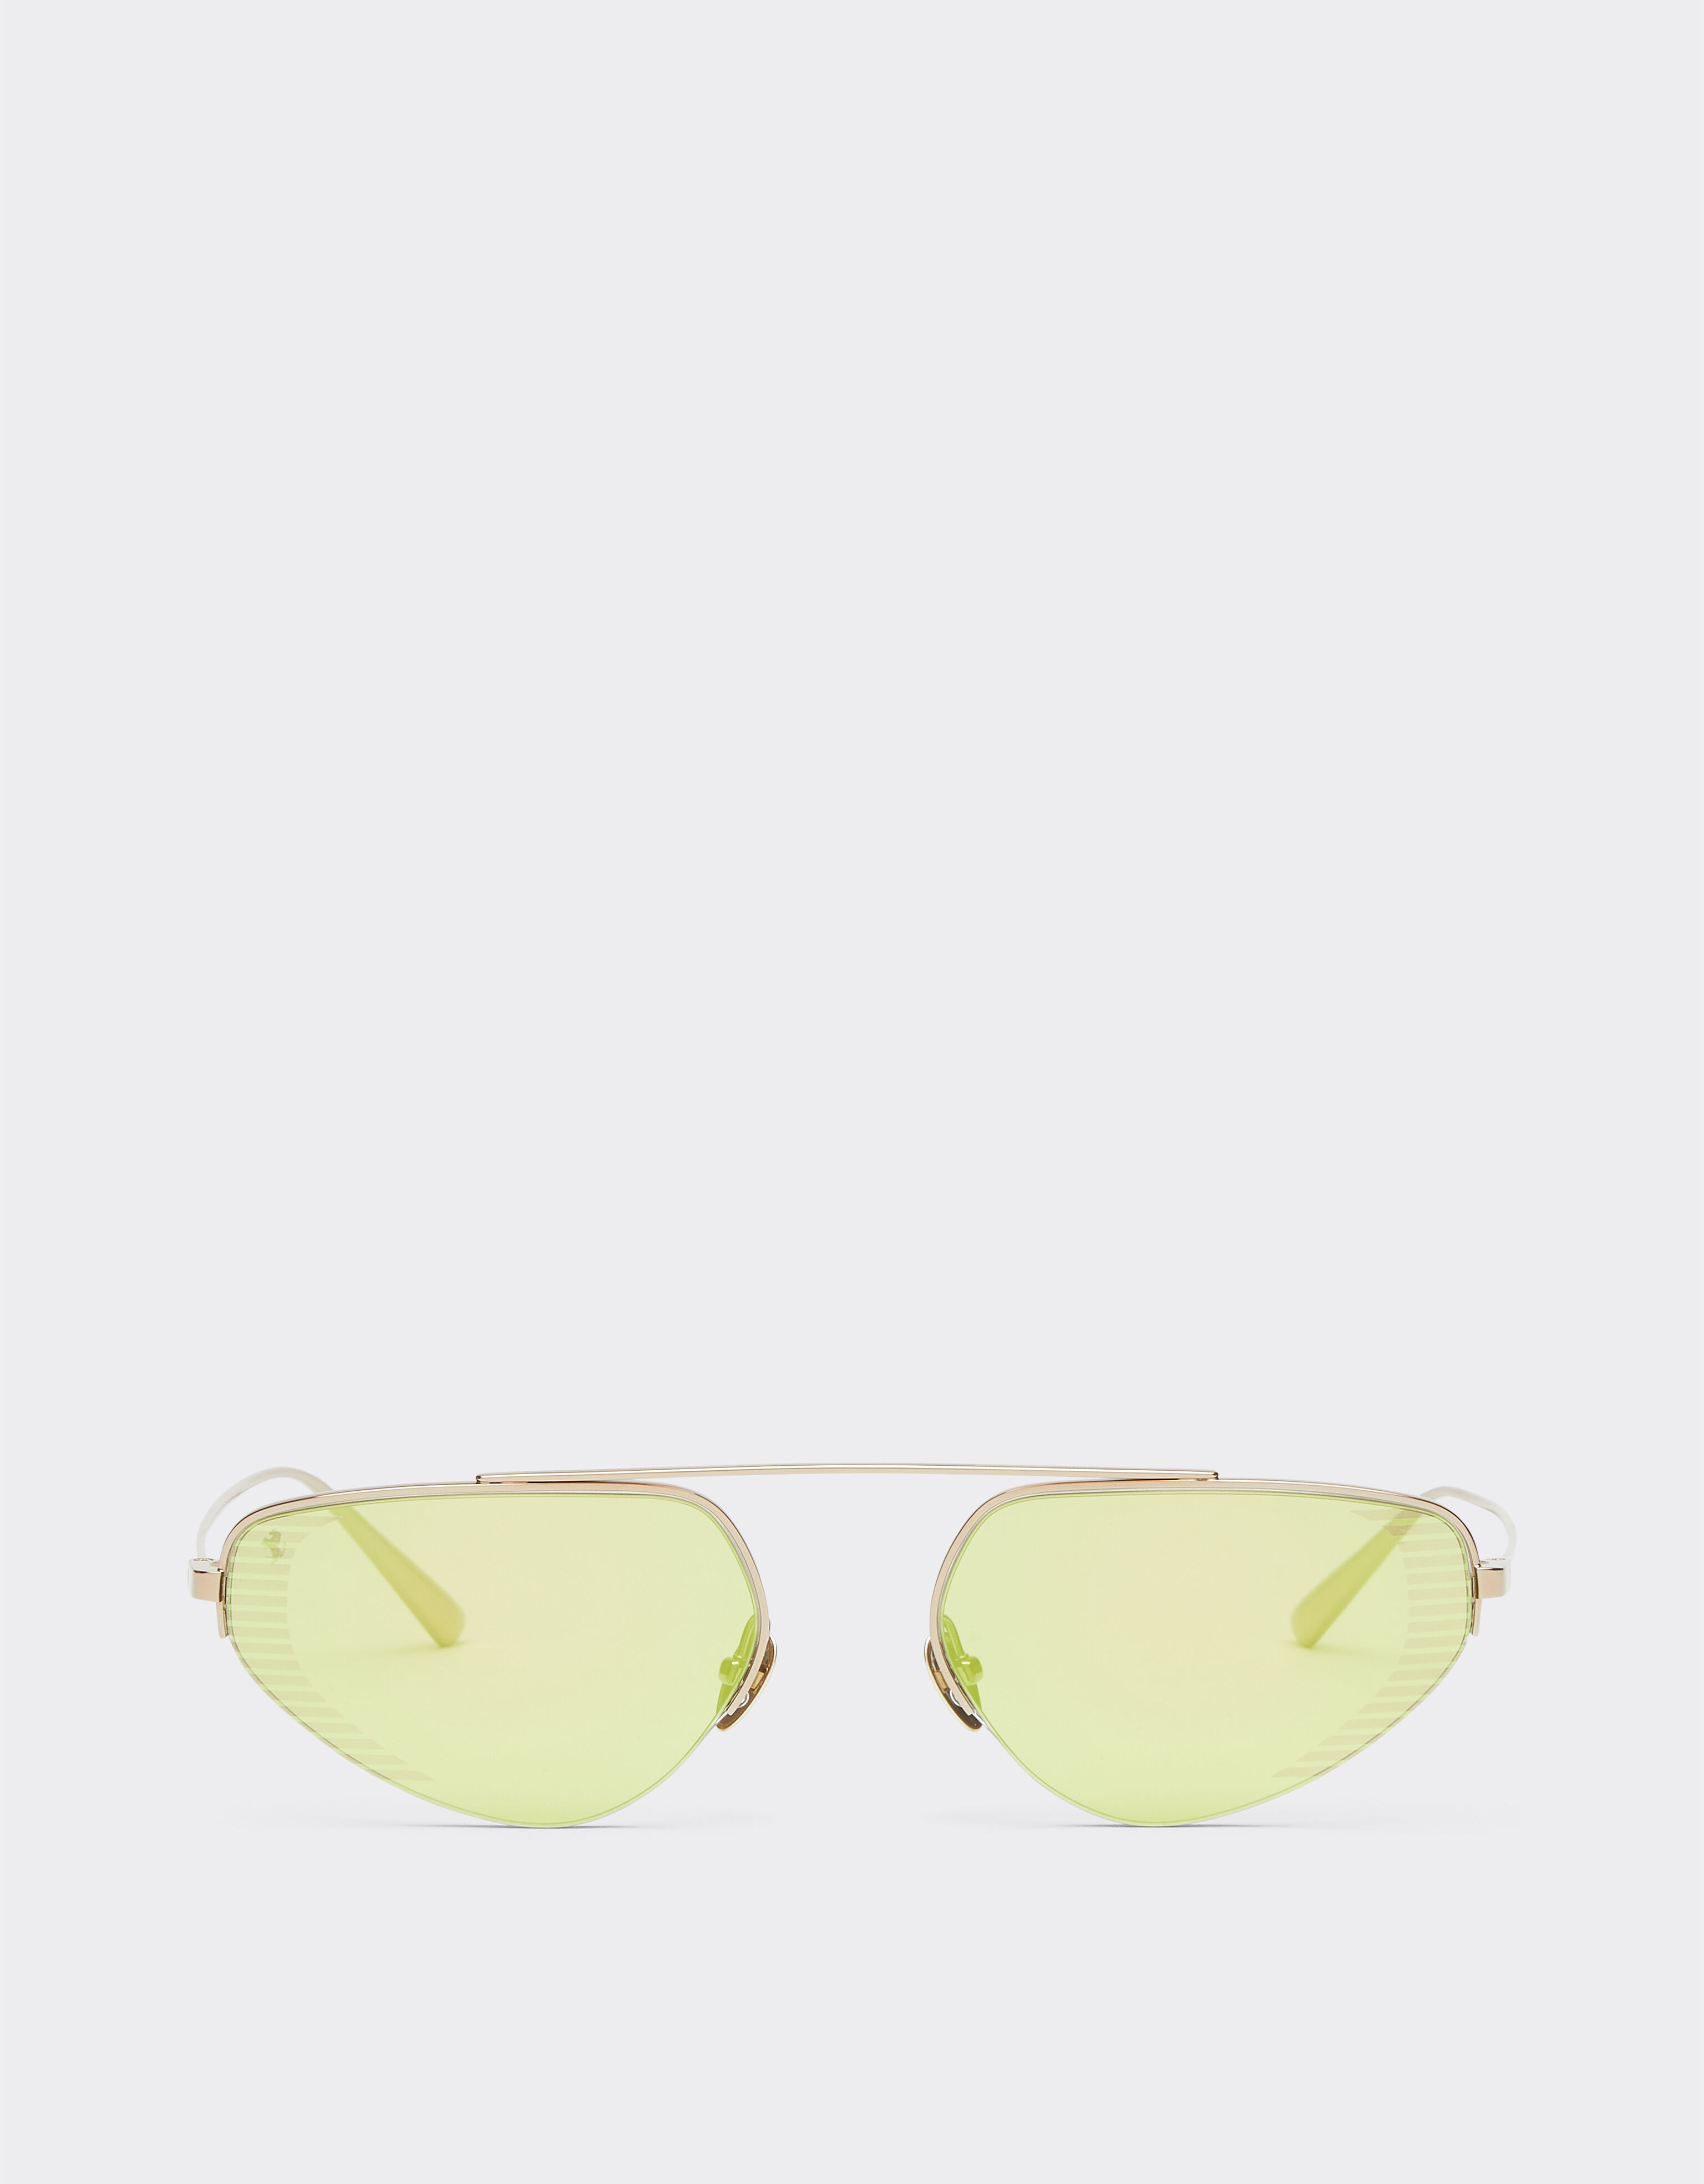 Ferrari Gafas de sol Ferrari de titanio dorado con lentes verdes de espejo Negro F1201f